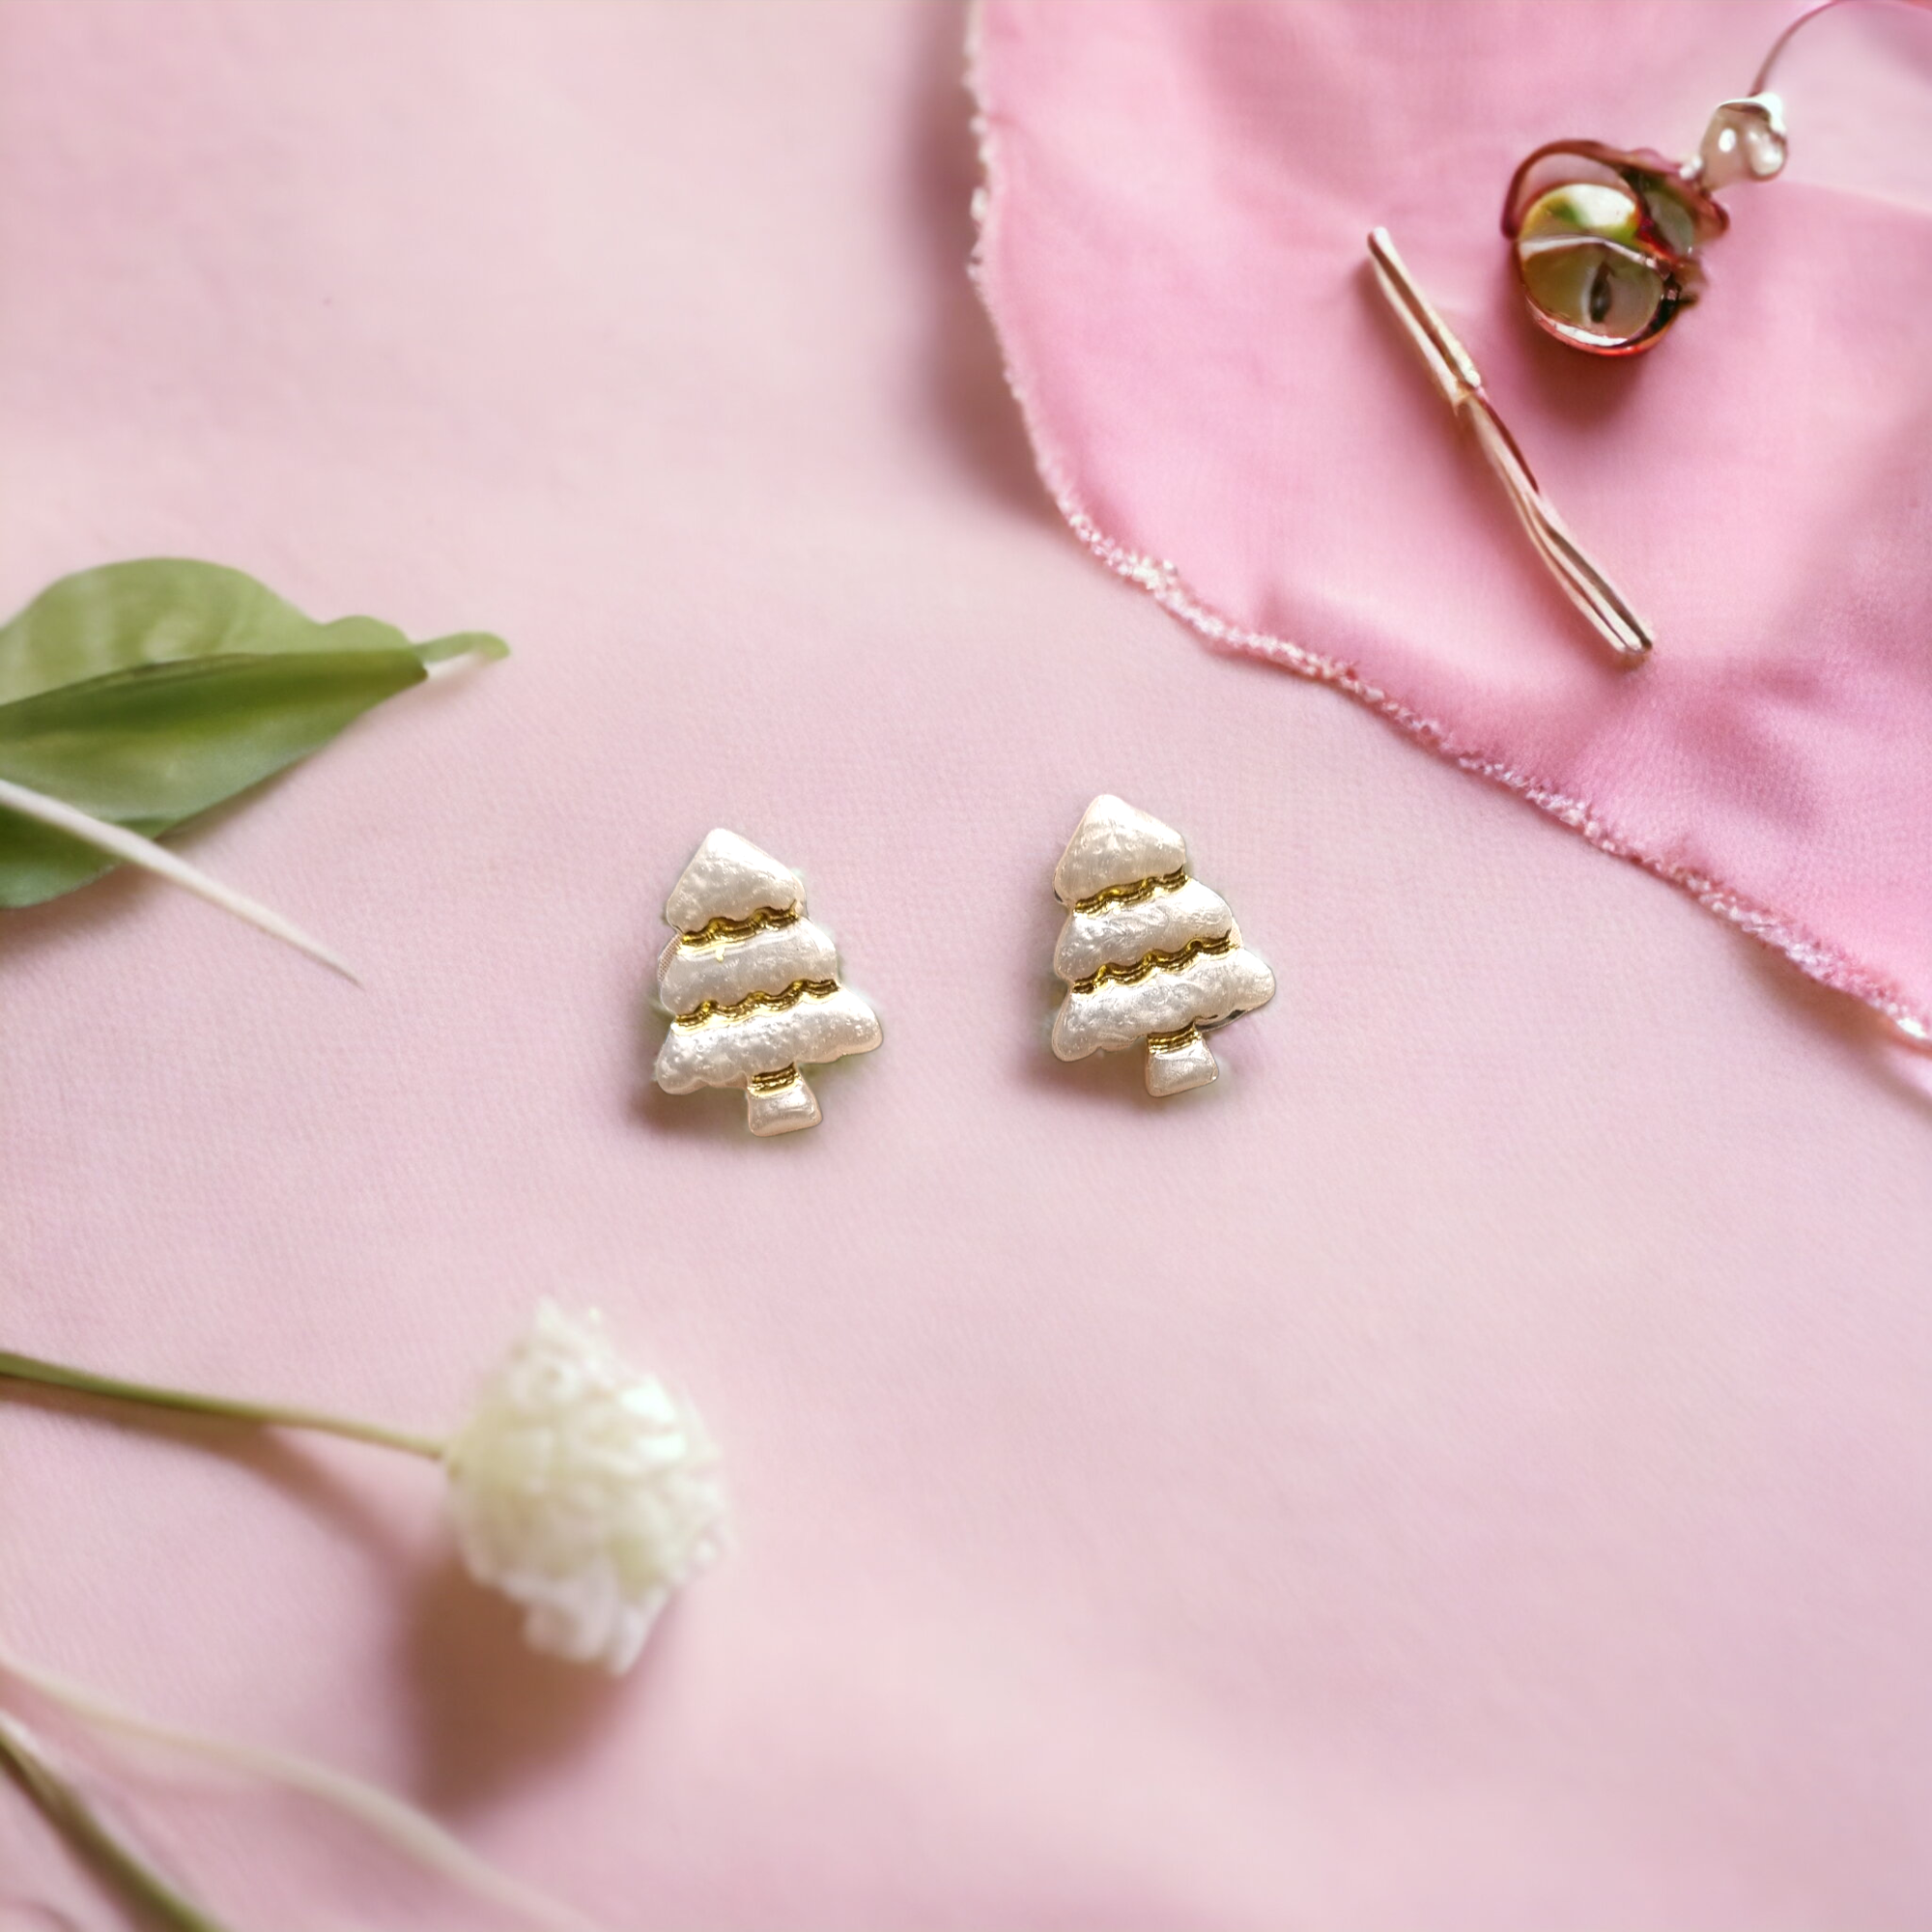 3D white and gold mini tree stud earrings